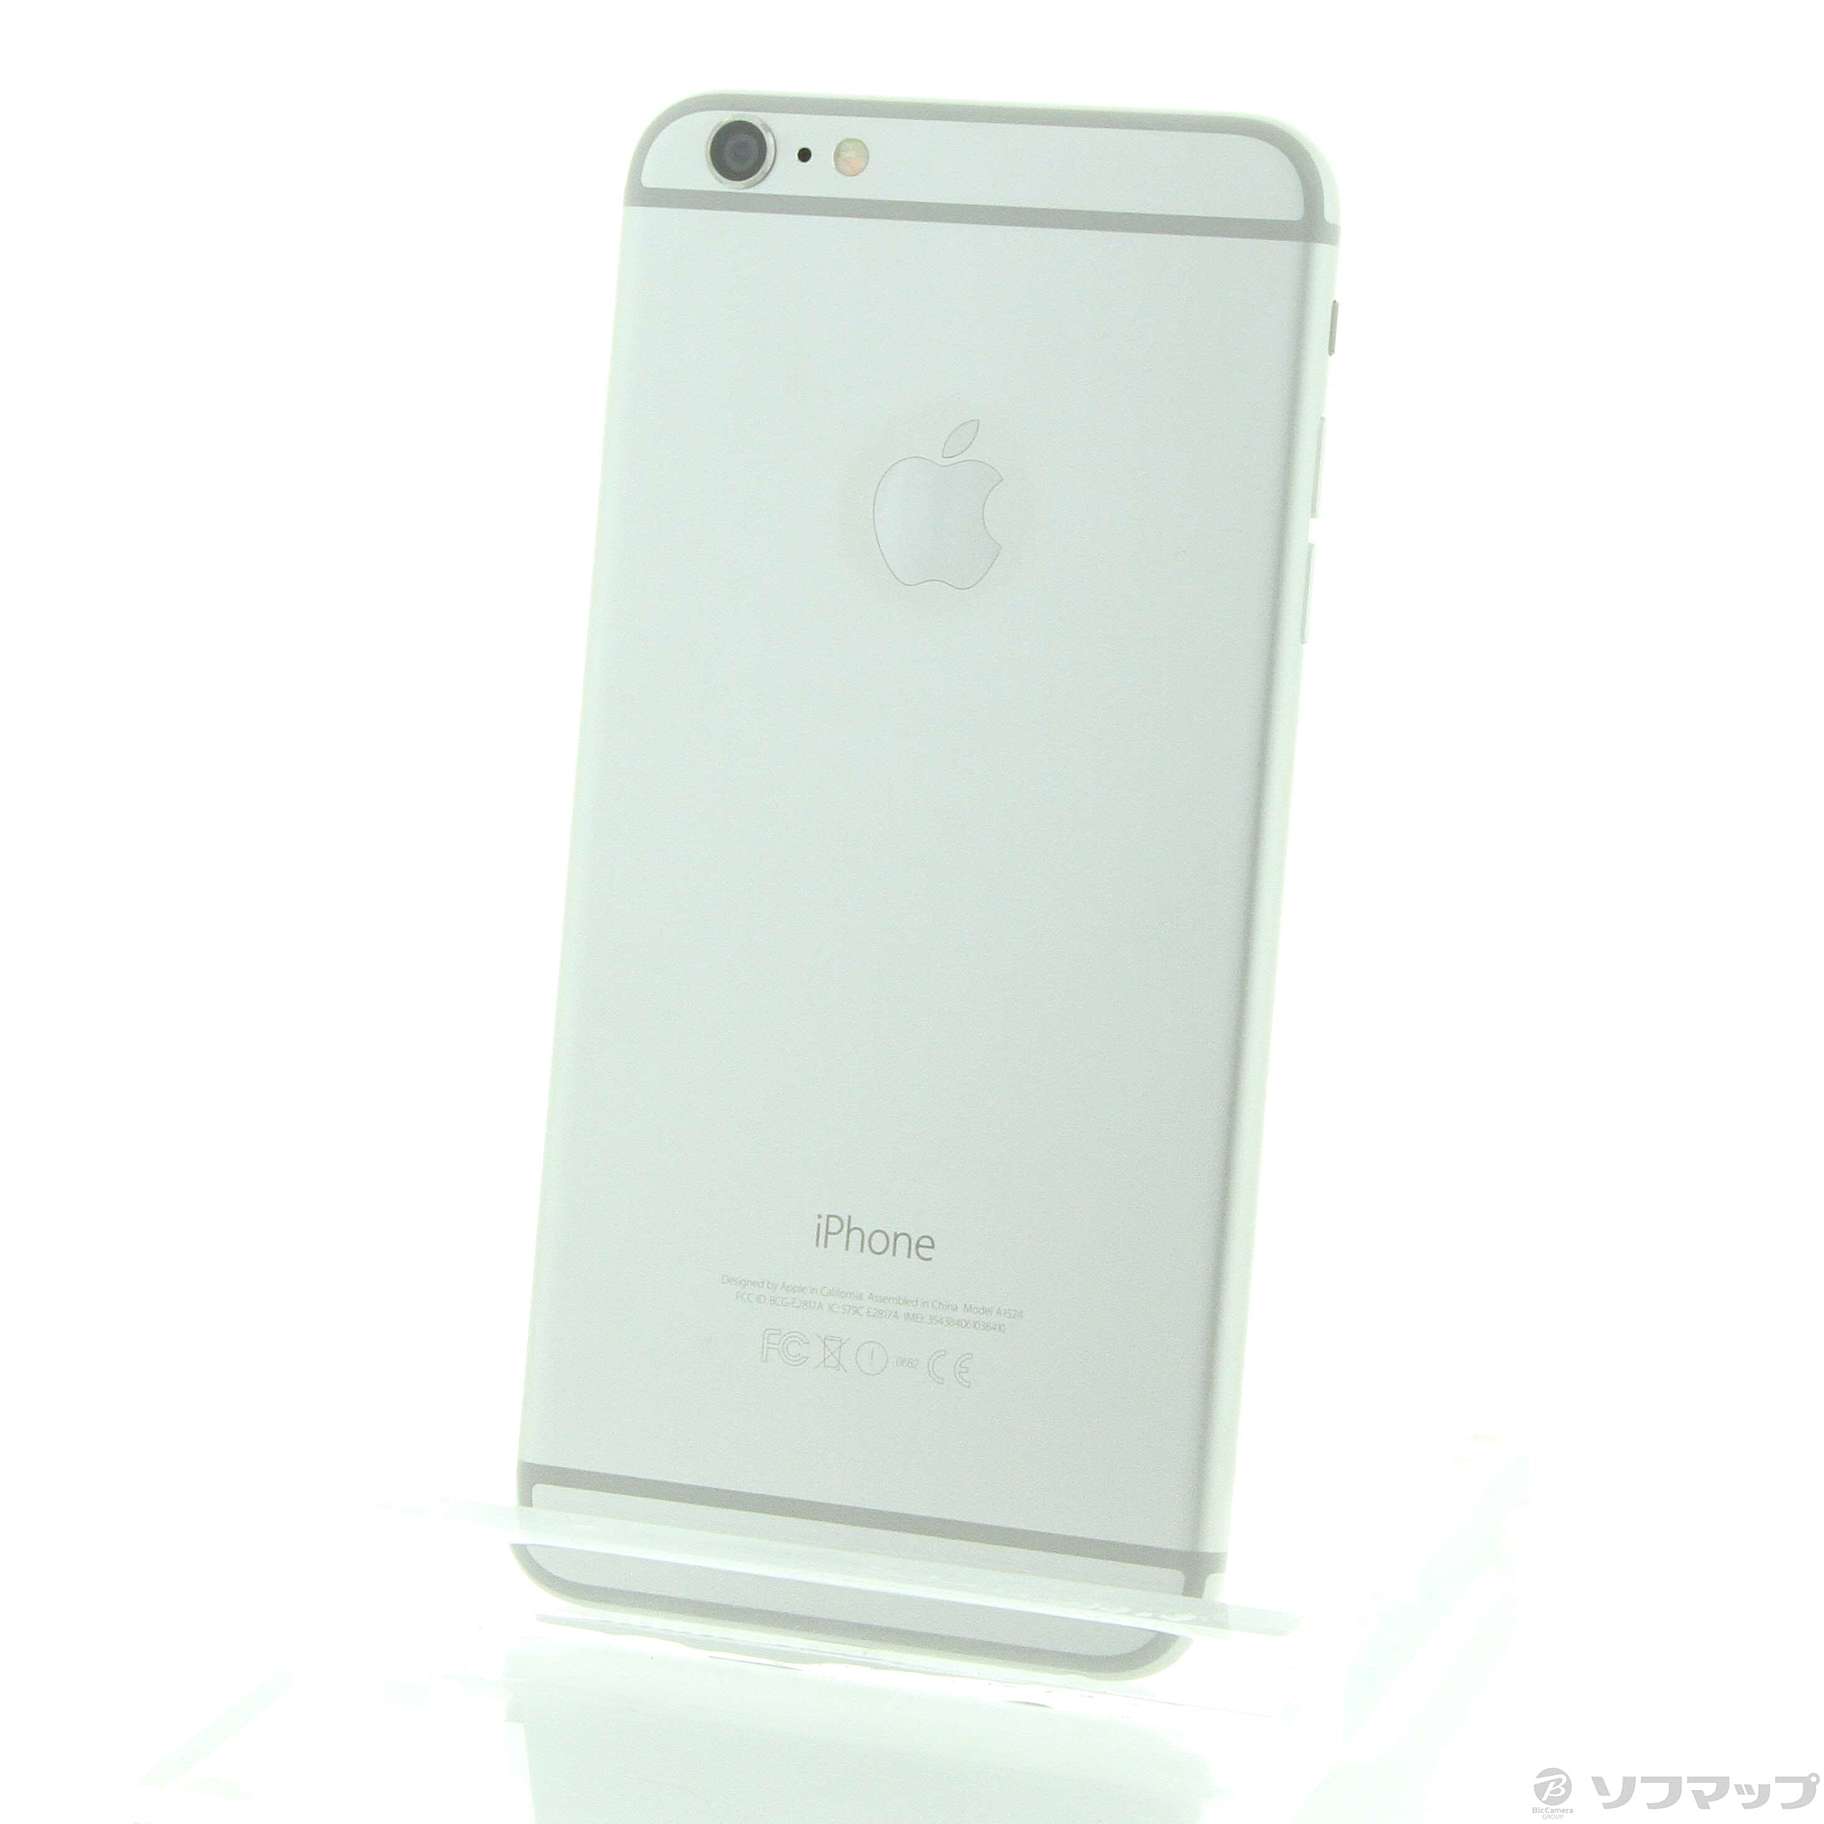 iPhone 6s Plus Silver 128 GB docomo